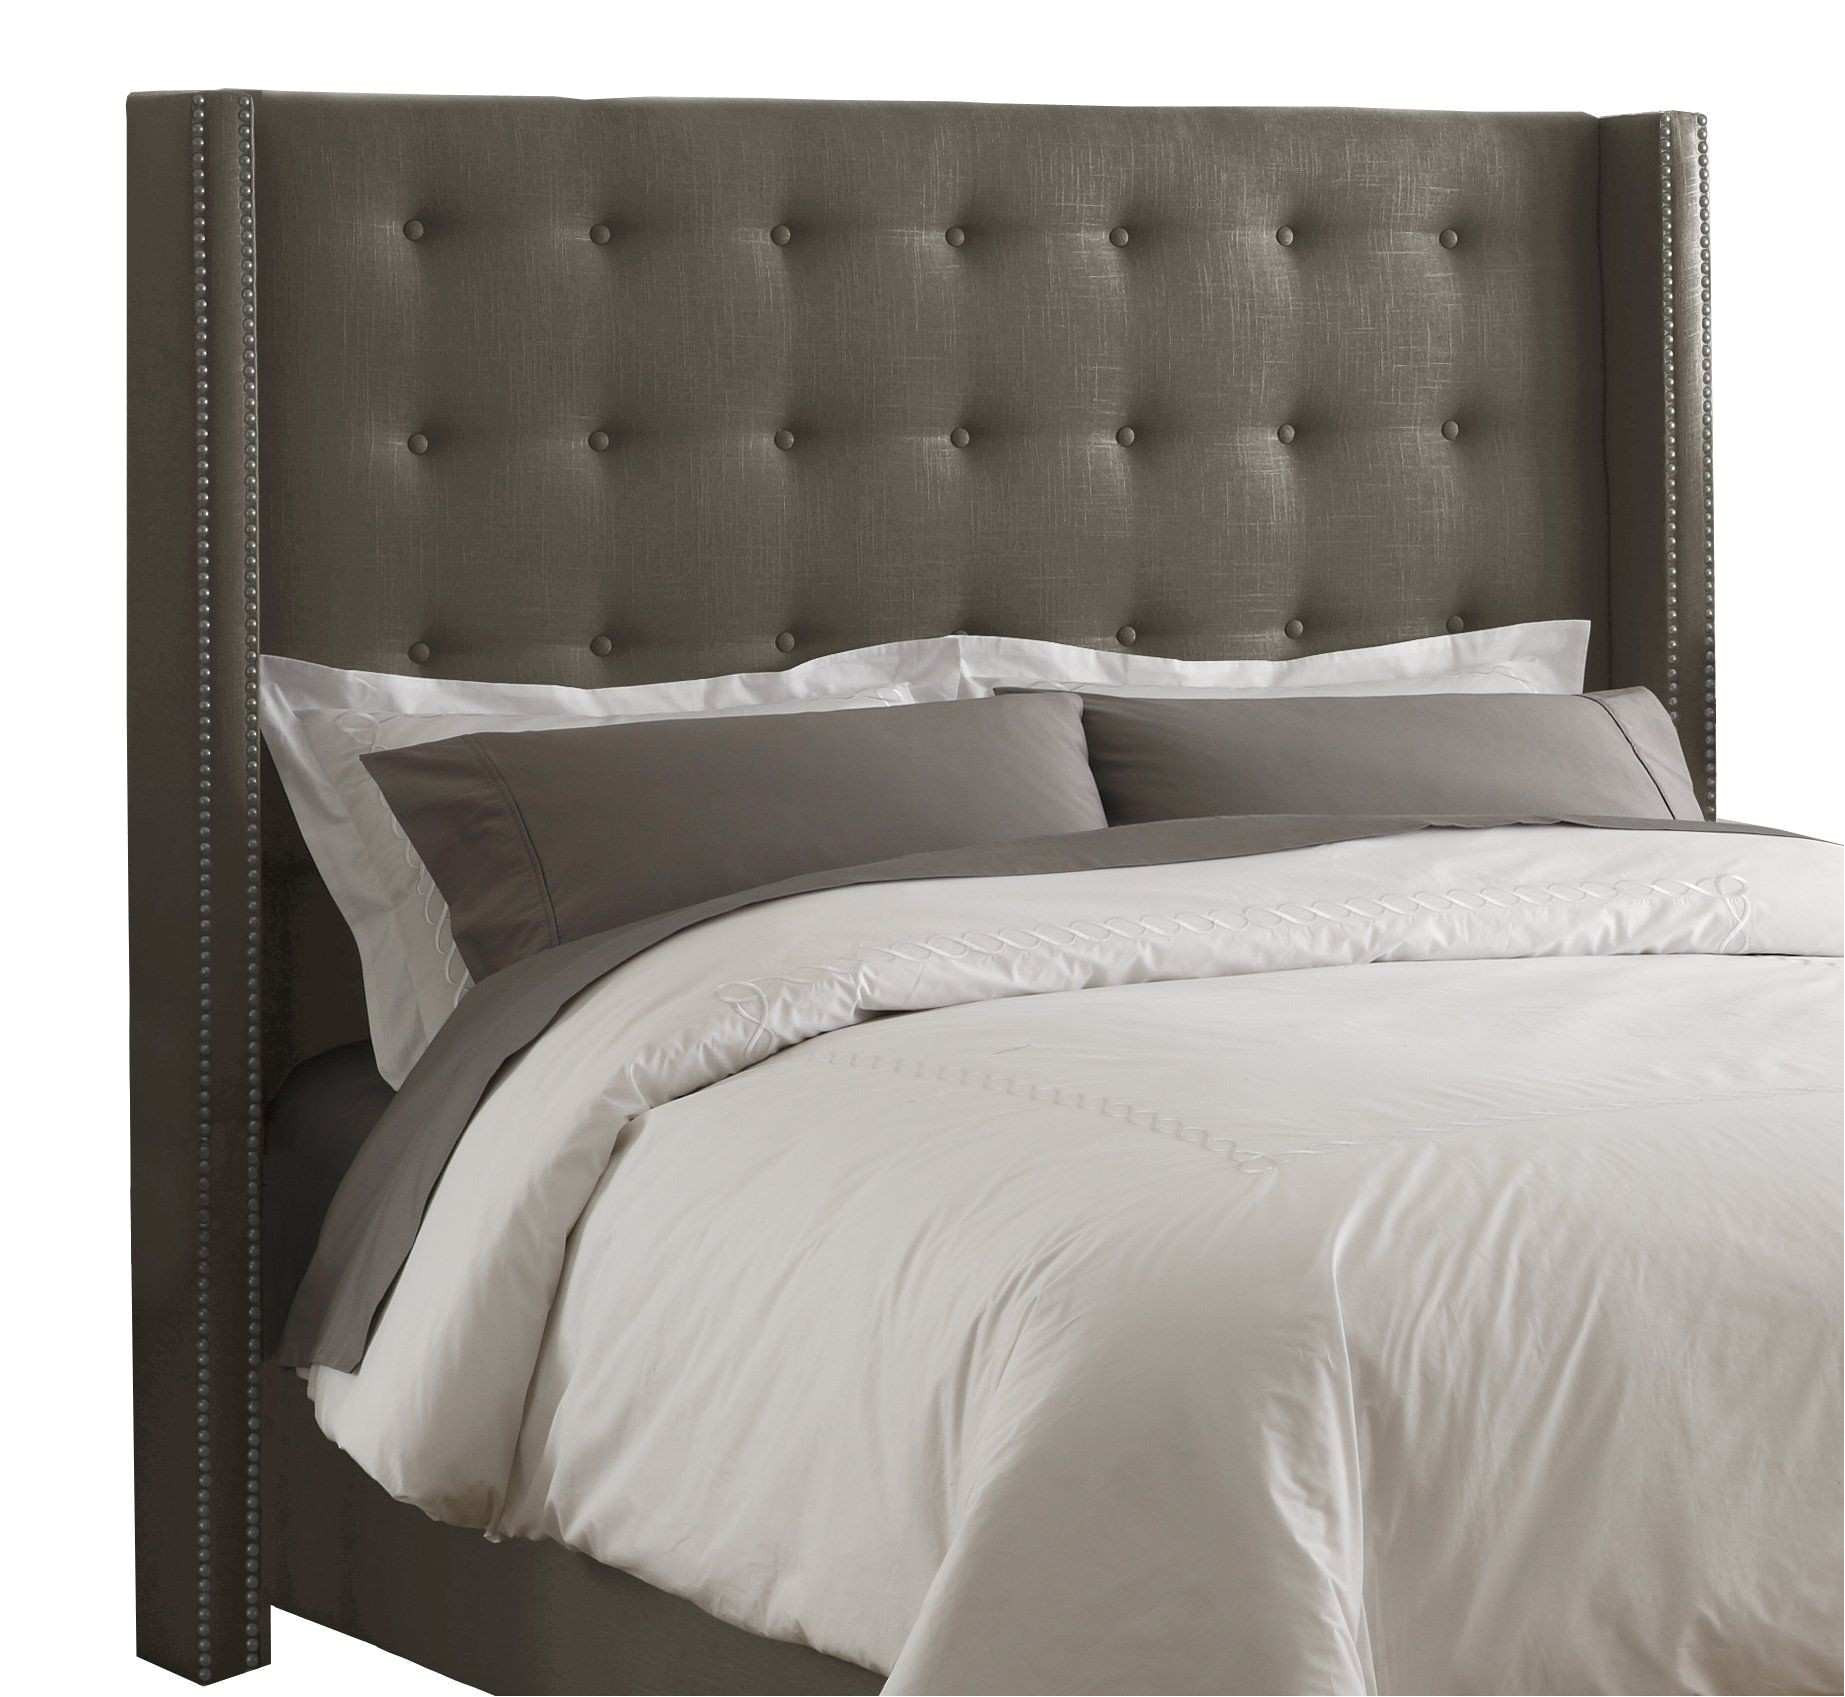 eastern king bed frame unique headboards king size bed headboard elegant cheap king size bed of